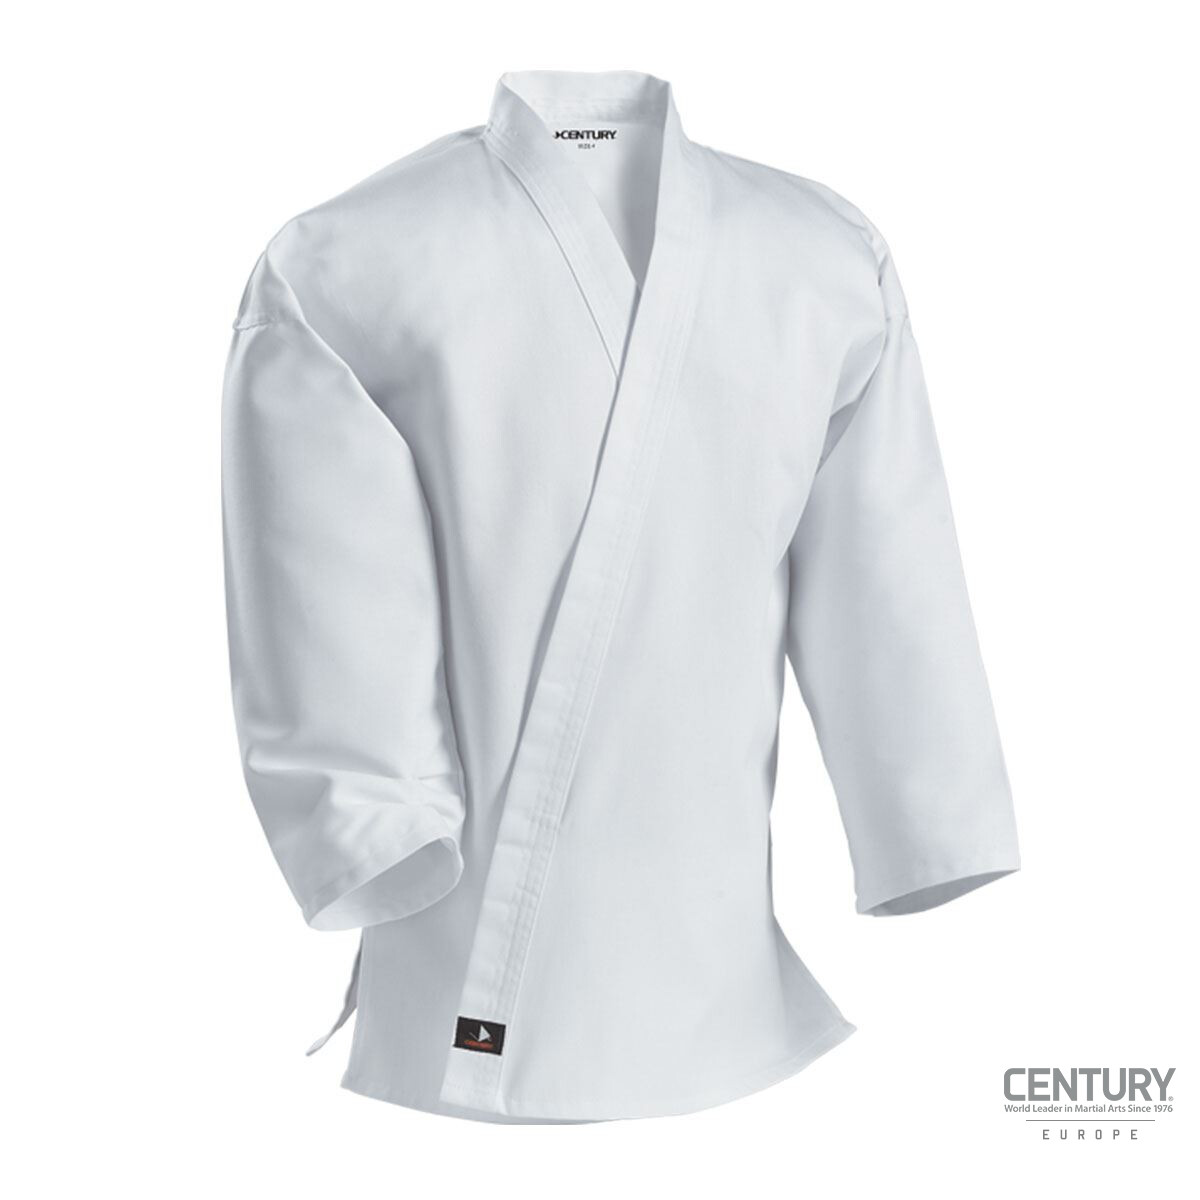 Lightweight Student Uniform 6 oz White [0] 117 - 130 cm